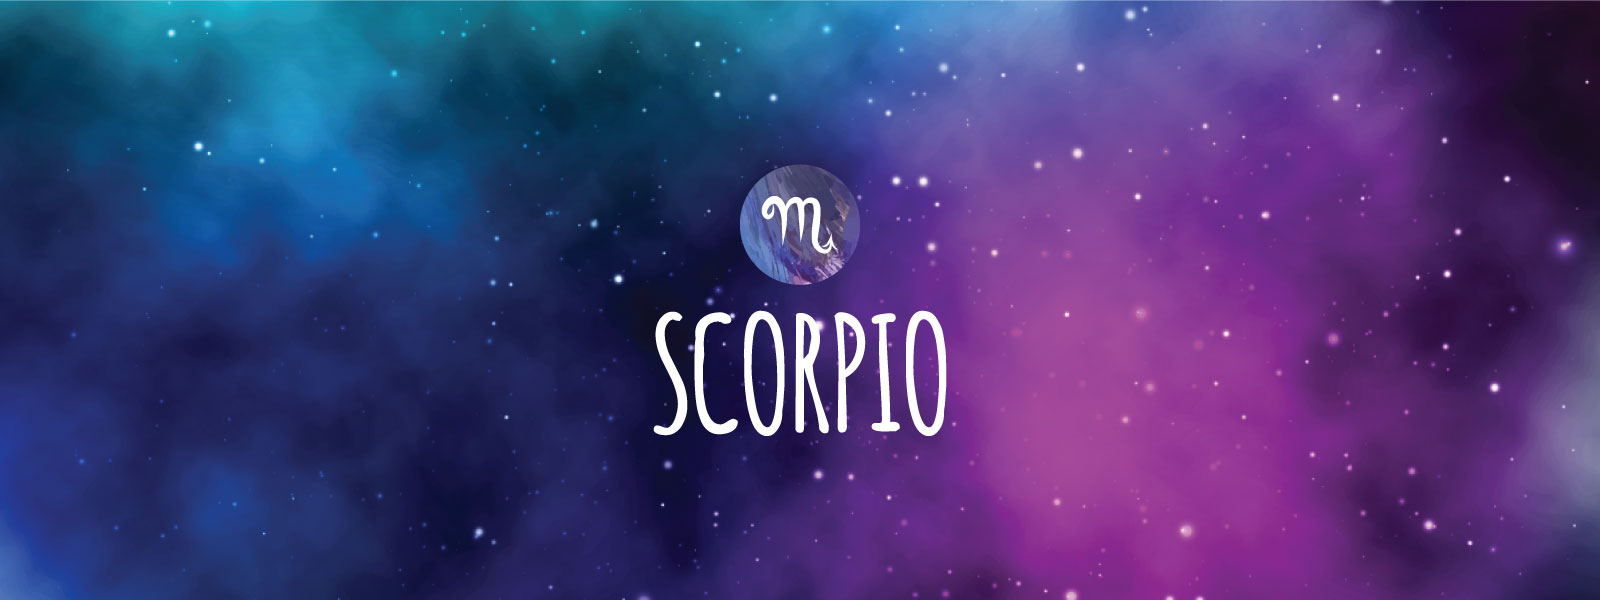 Summer 2020 Scorpio - My Sign Says